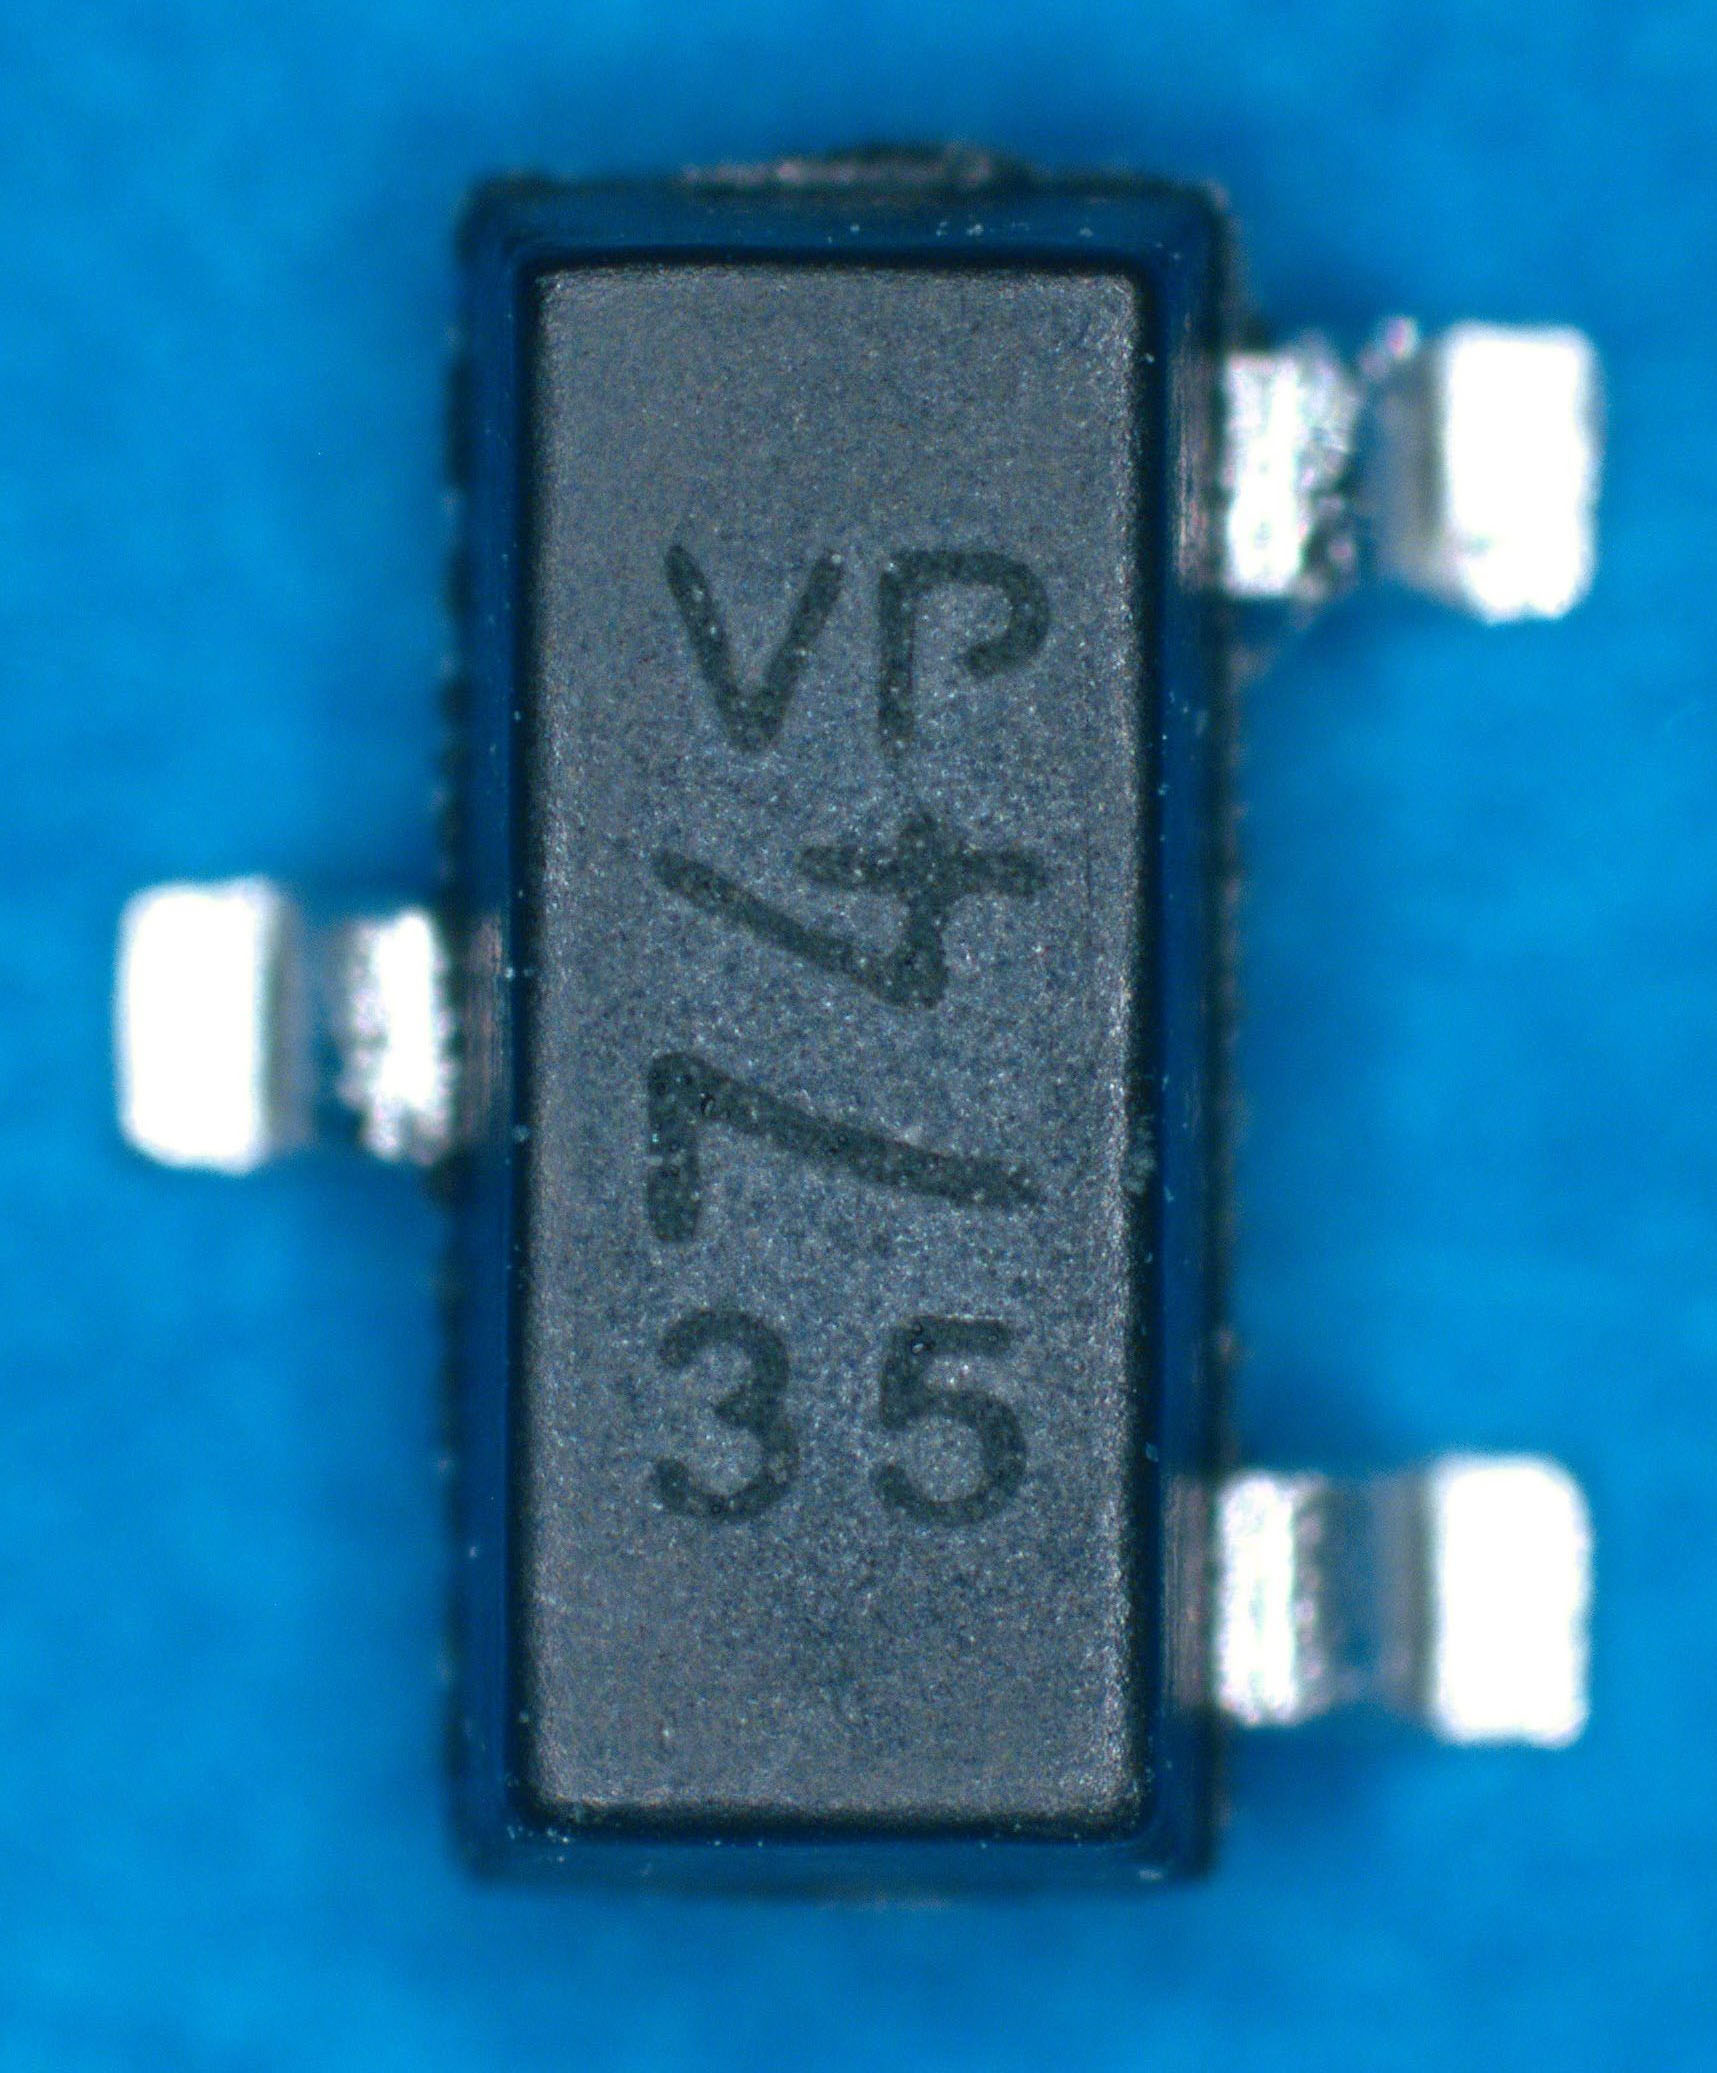 SOT-23 plastic encapsulated microcircuit